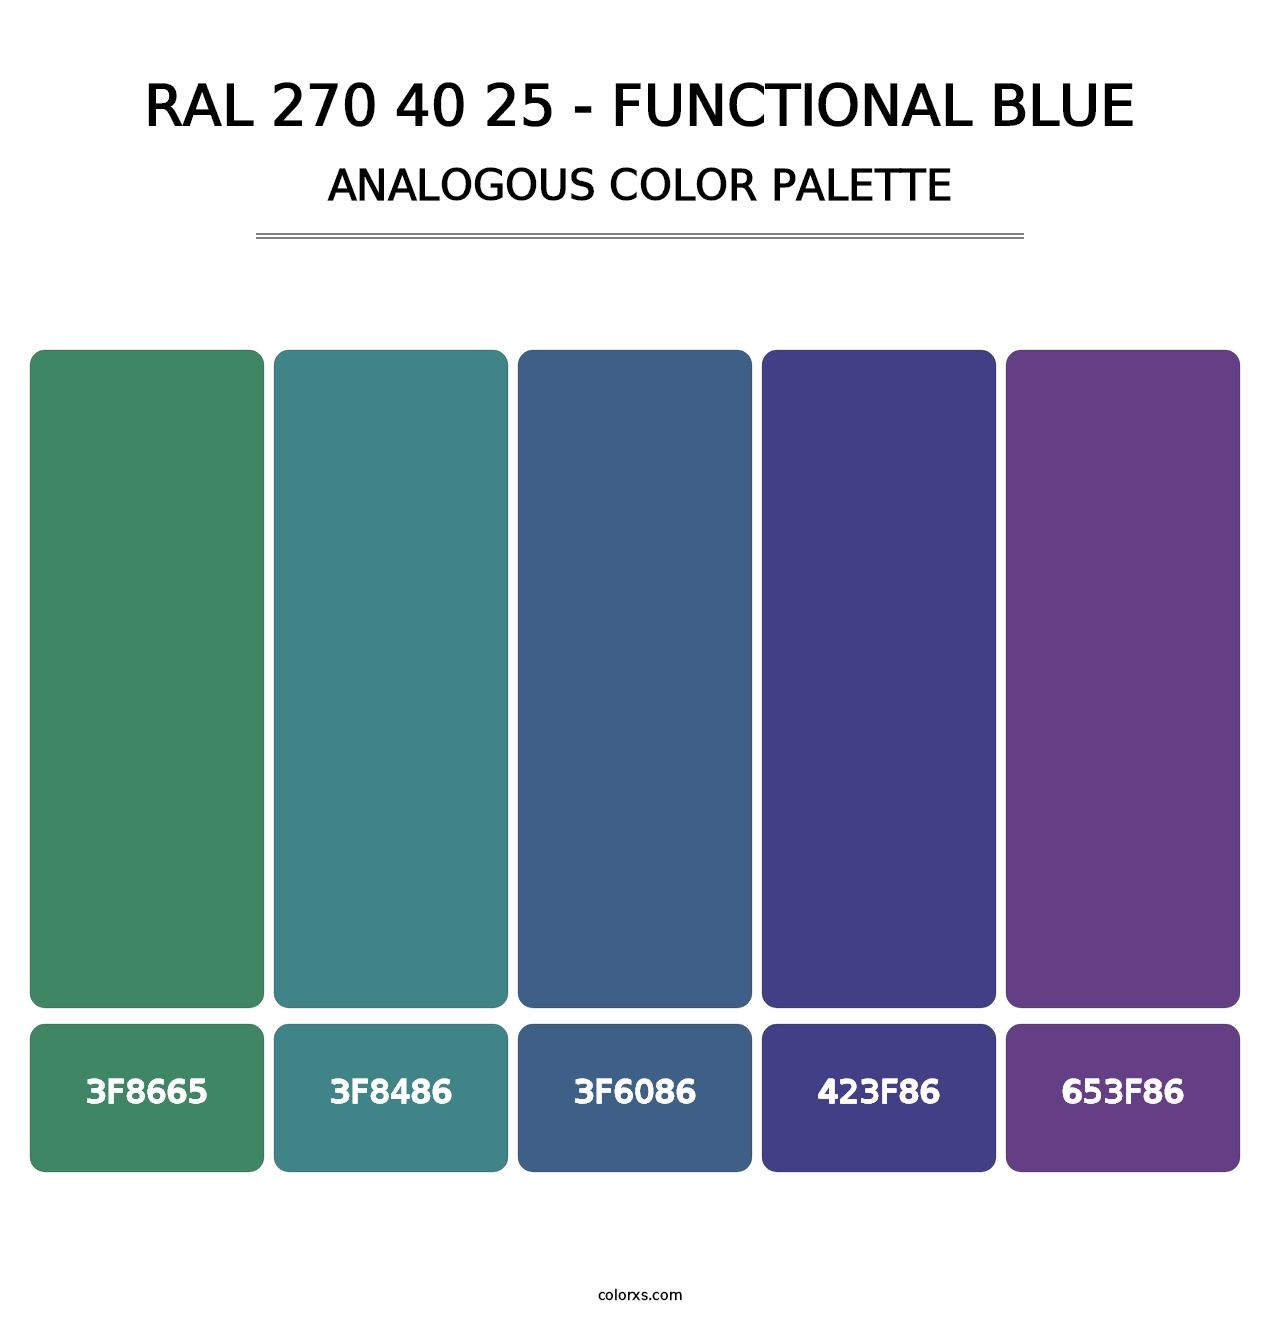 RAL 270 40 25 - Functional Blue - Analogous Color Palette